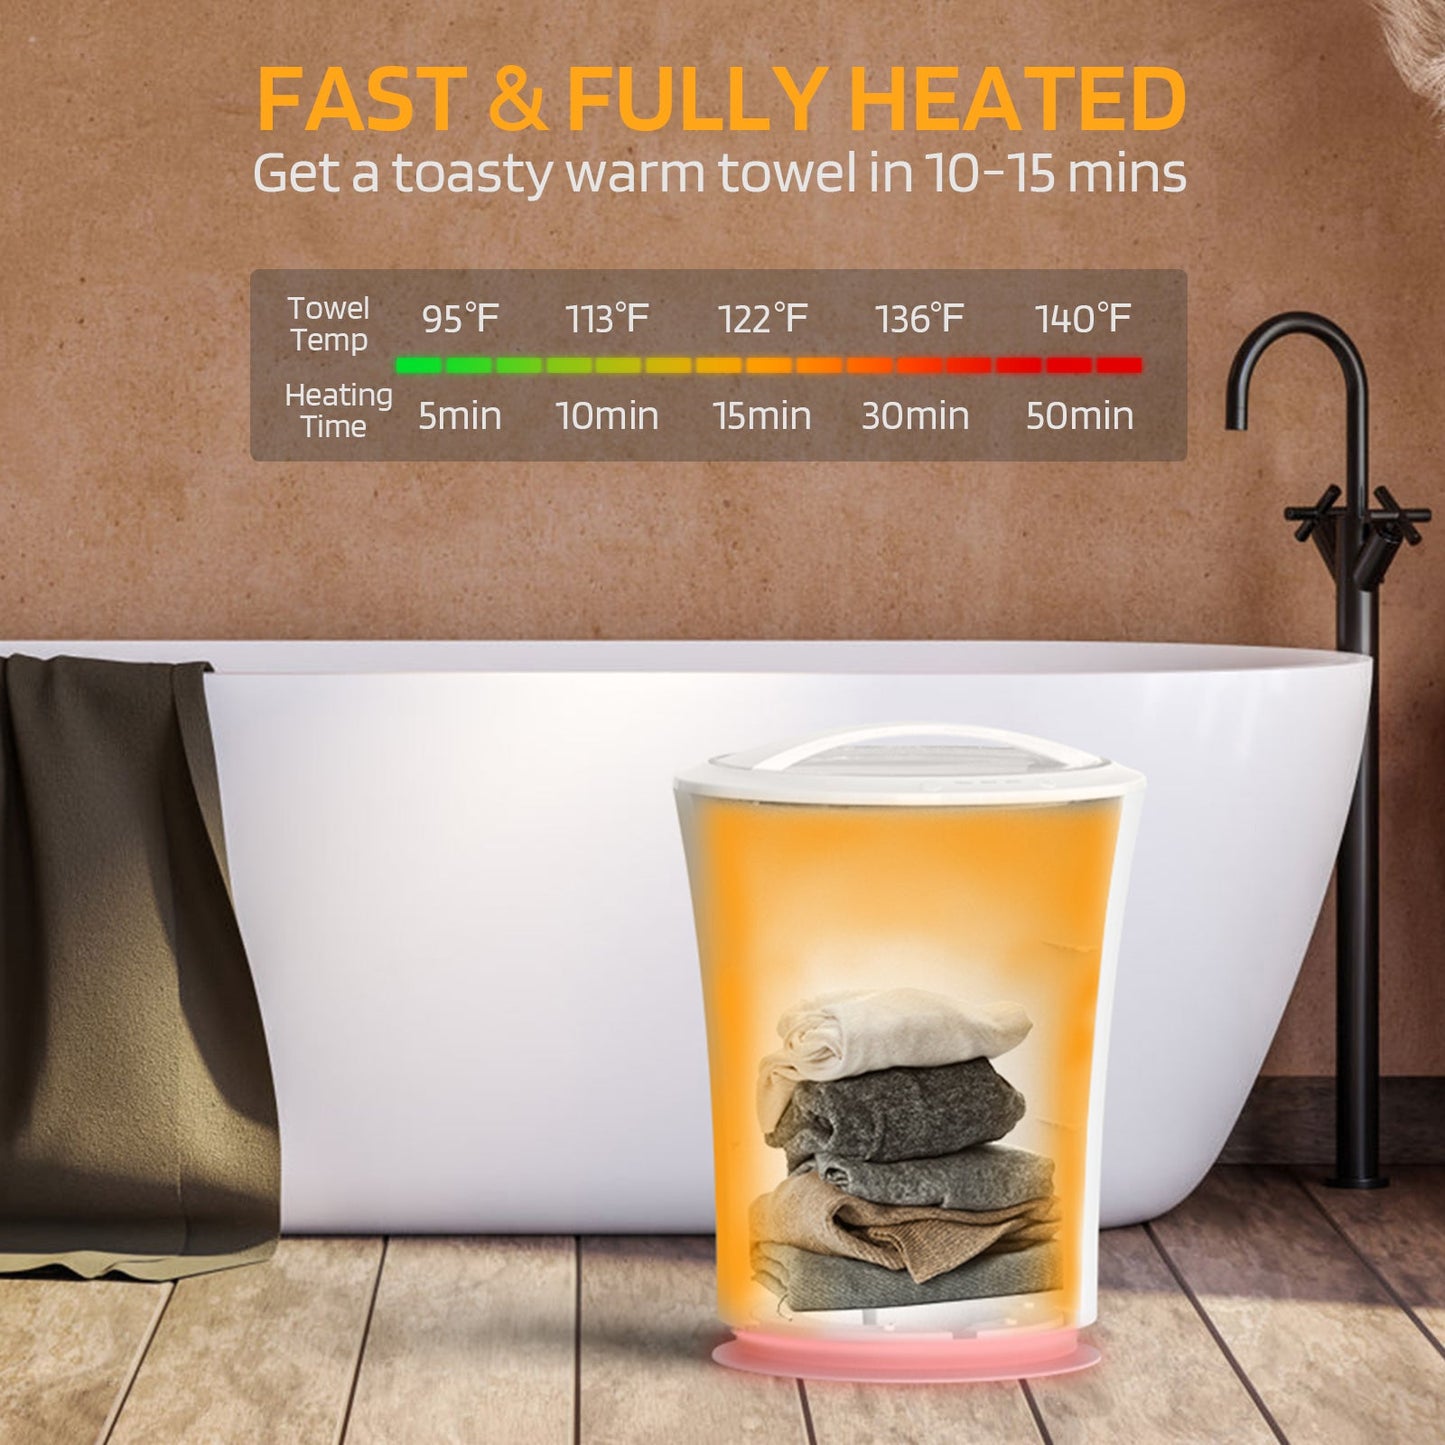 【Test】 iSnug Towel Warmer, 5.3 Gal Heating Bucket for Bathrobe, Blanket